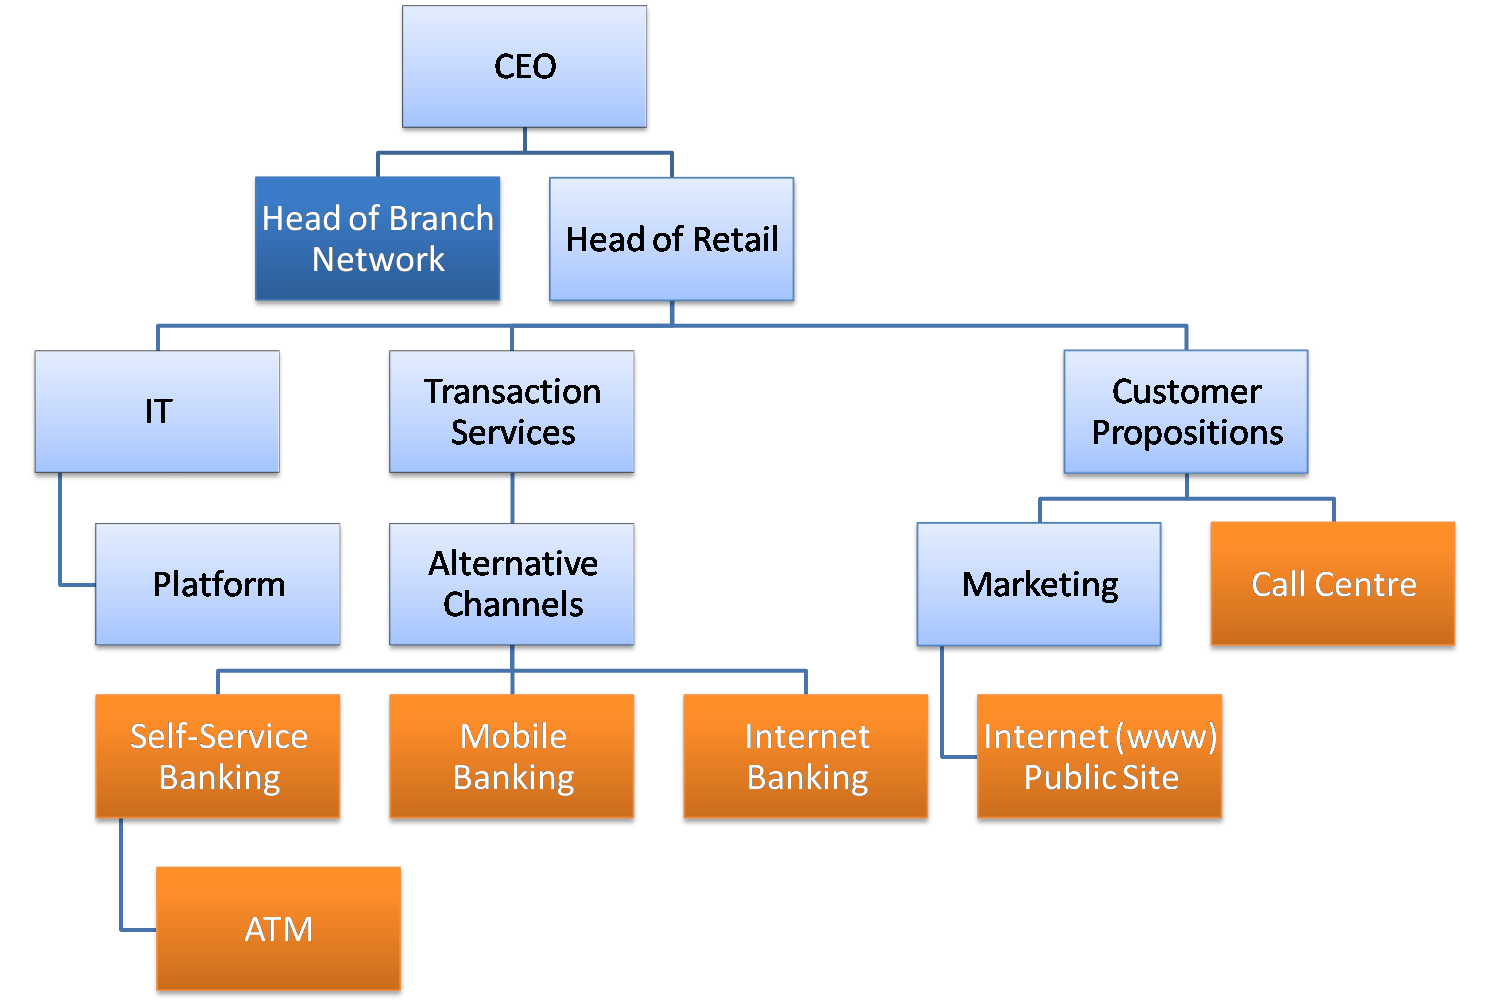 Typical Bank Organizational Chart